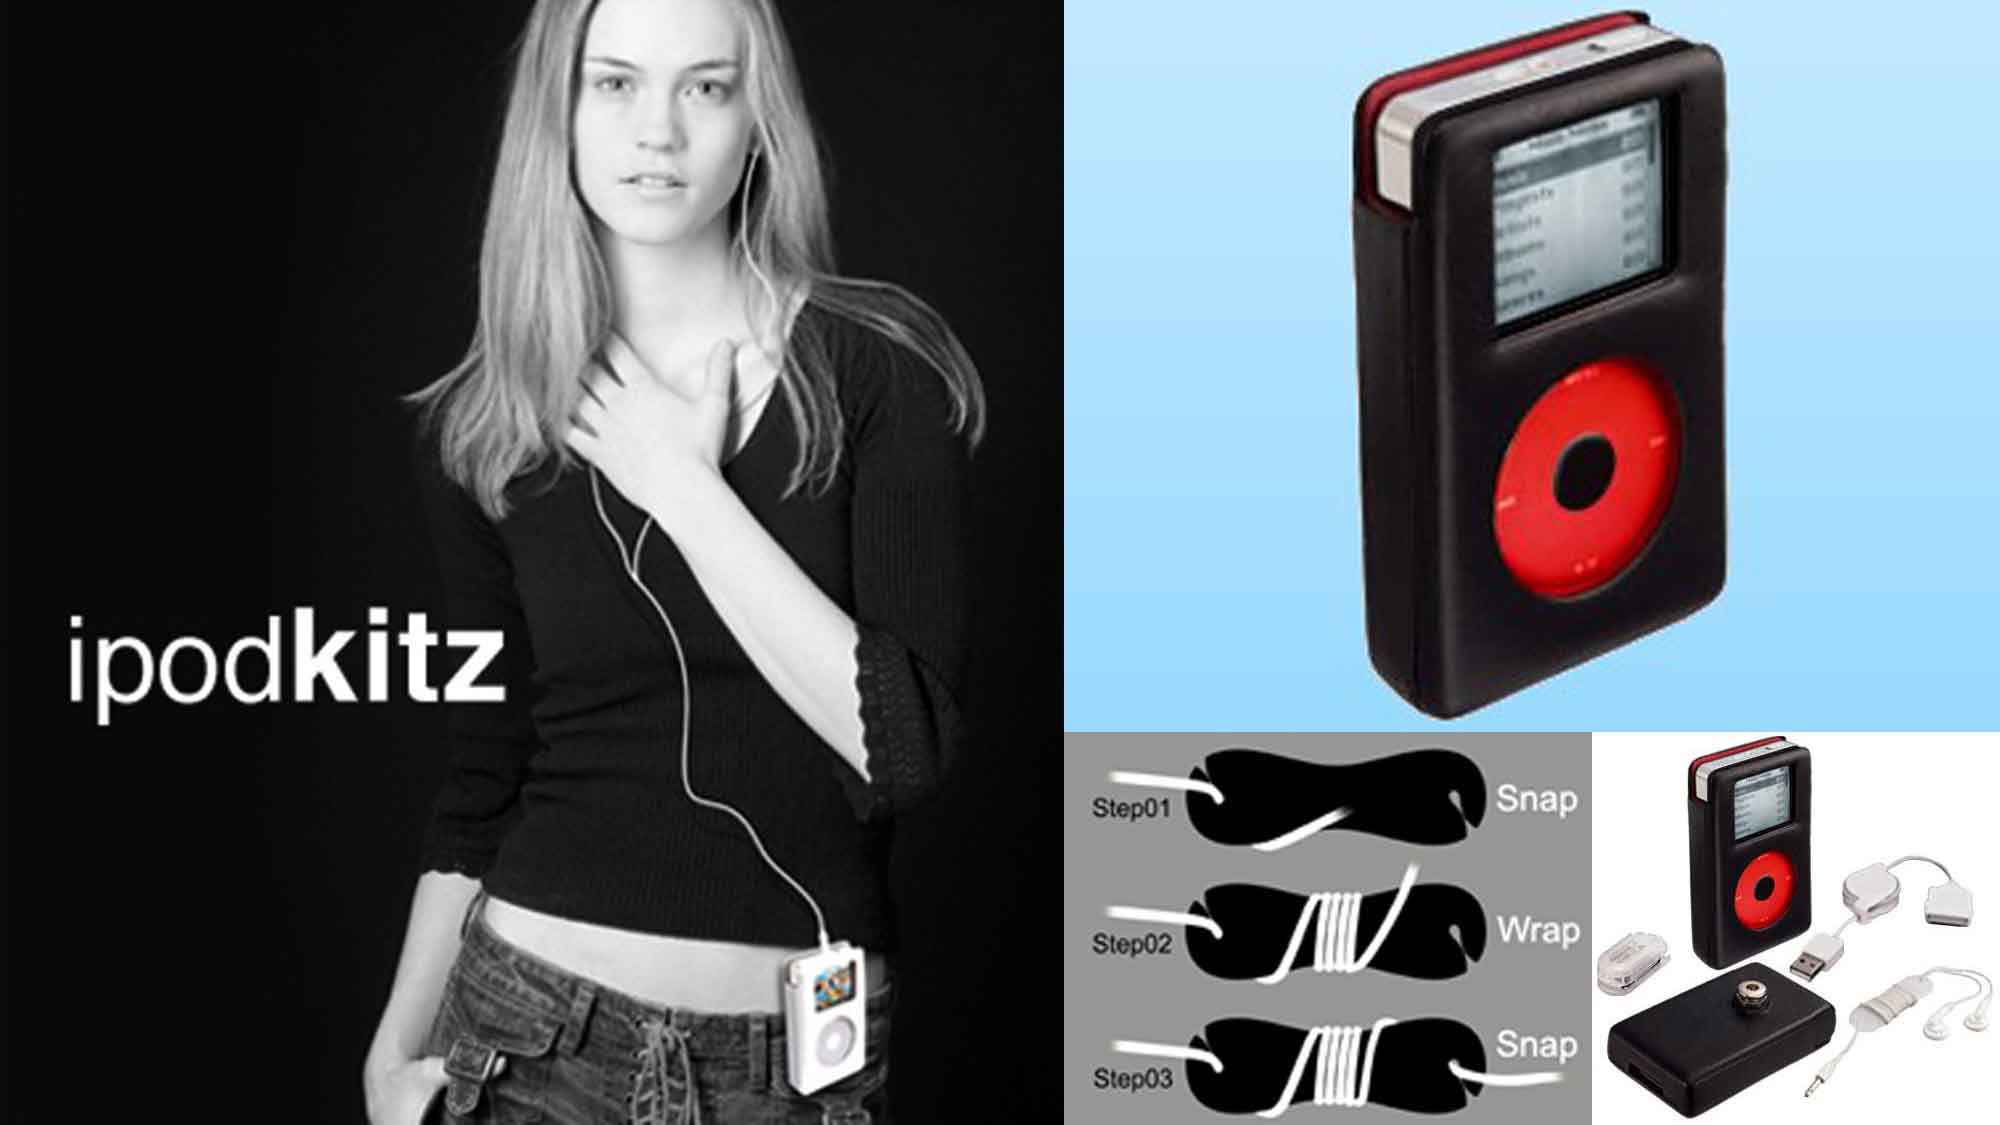 iPodKitz From Itzkitz: Cool iPod Accessories Bundle - Review